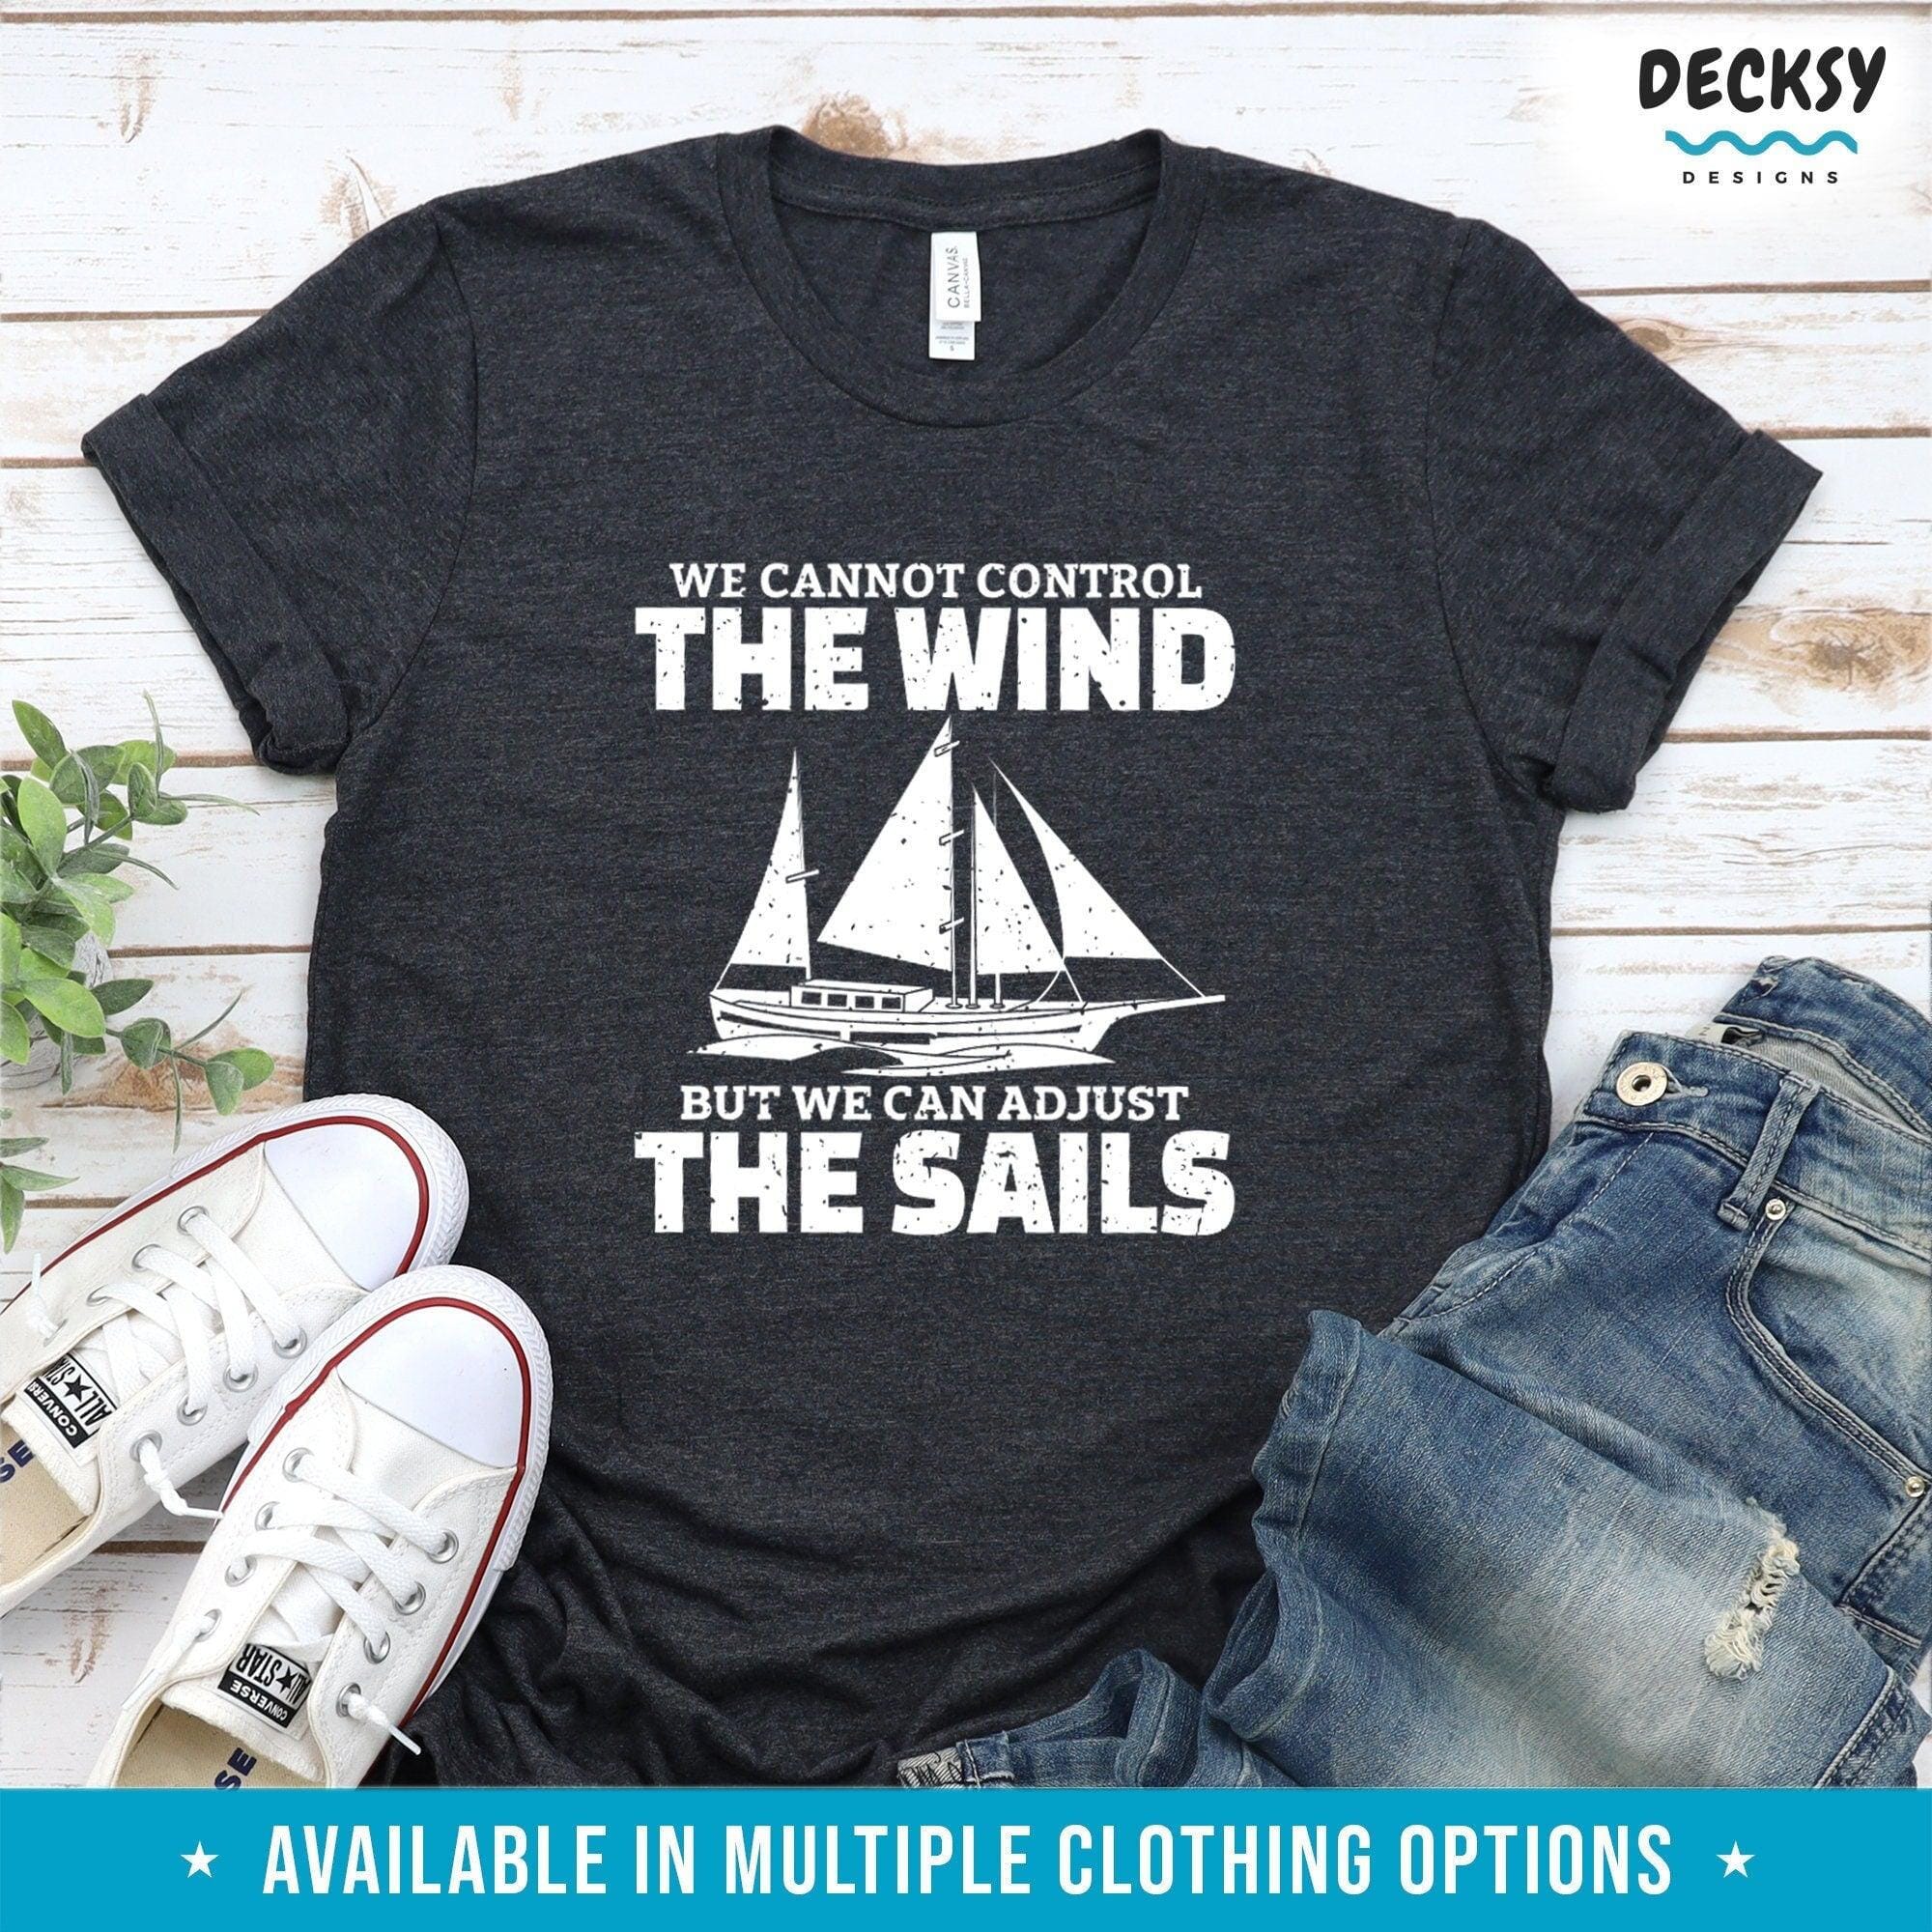 Sailing Tshirt, Sailor Gift-Clothing:Gender-Neutral Adult Clothing:Tops & Tees:T-shirts:Graphic Tees-DecksyDesigns